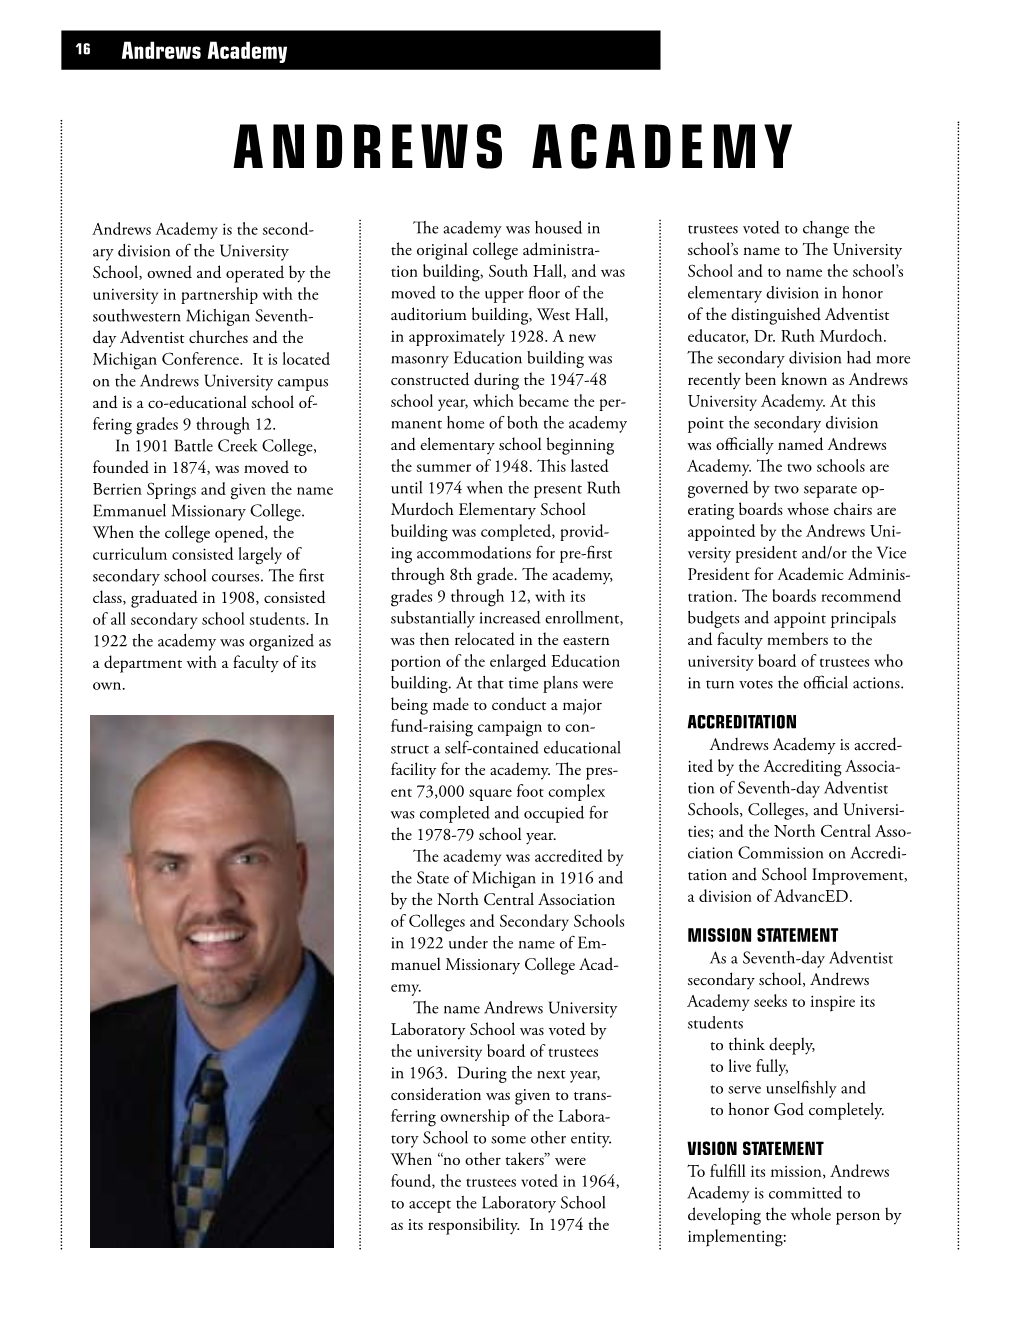 Andrews Academy Andrews Academy